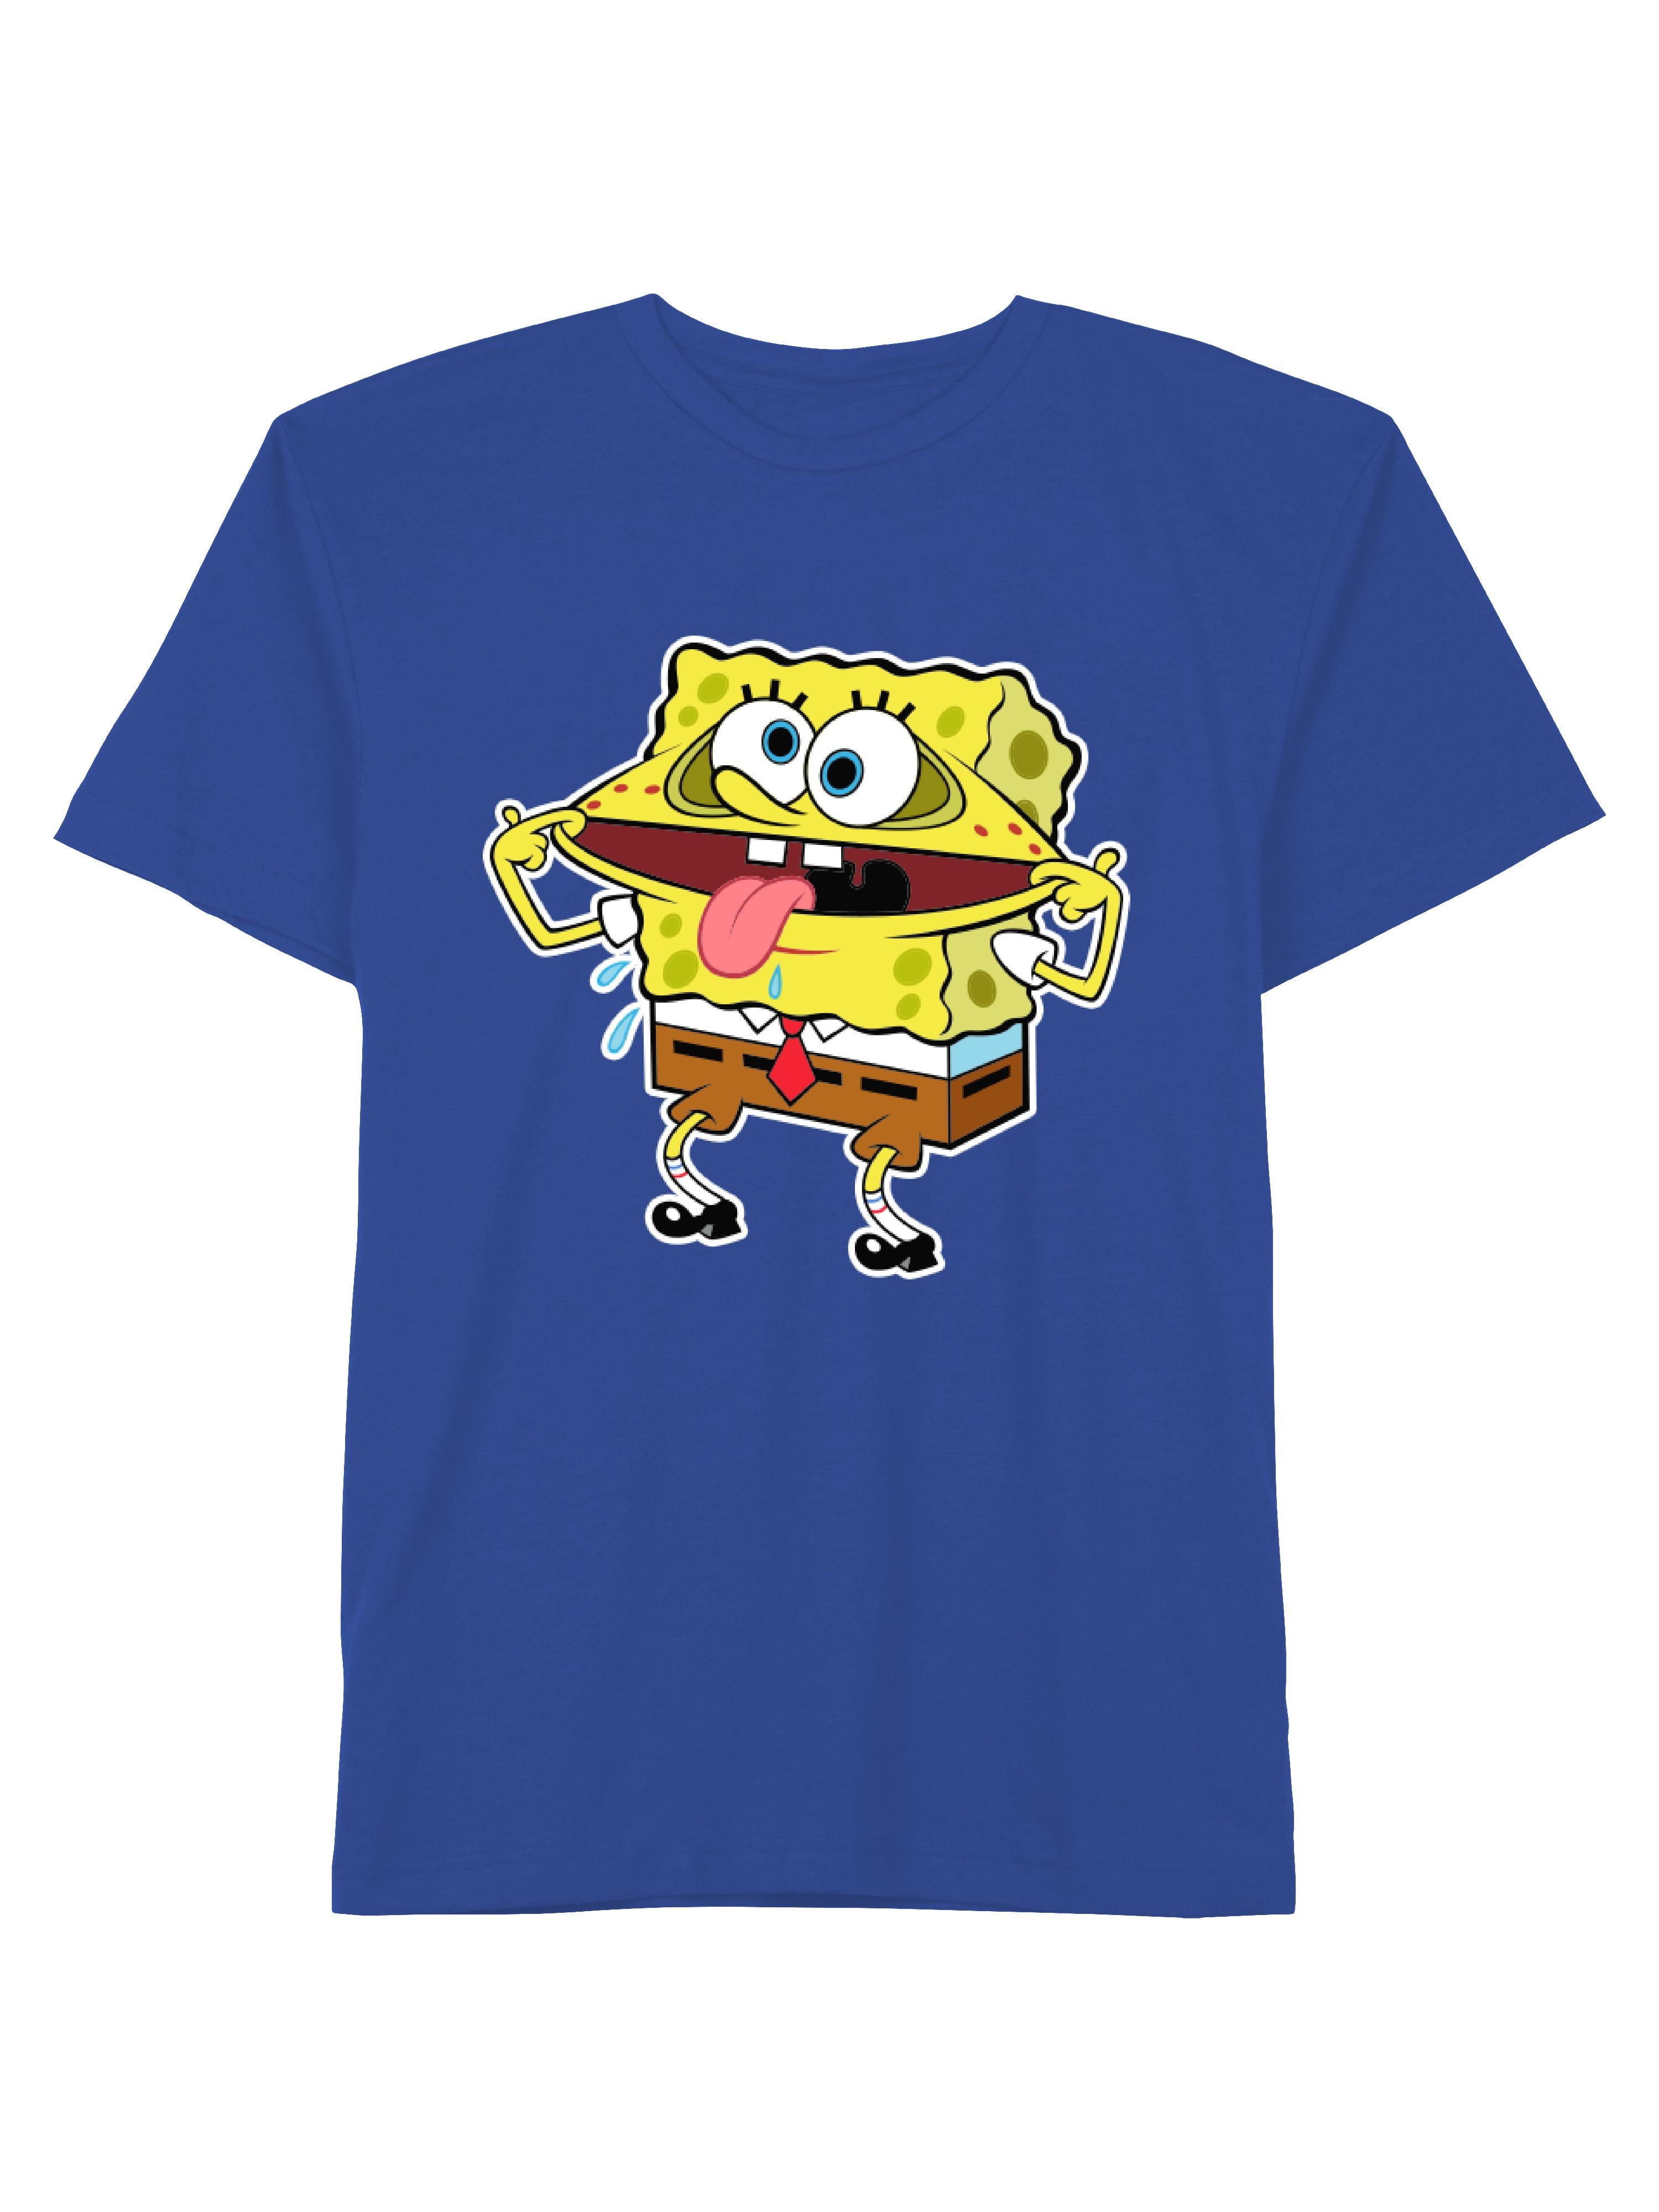 Adults Unisex Nickelodeon Spongebob Squarepants Inspired Squad Goals Tshirt